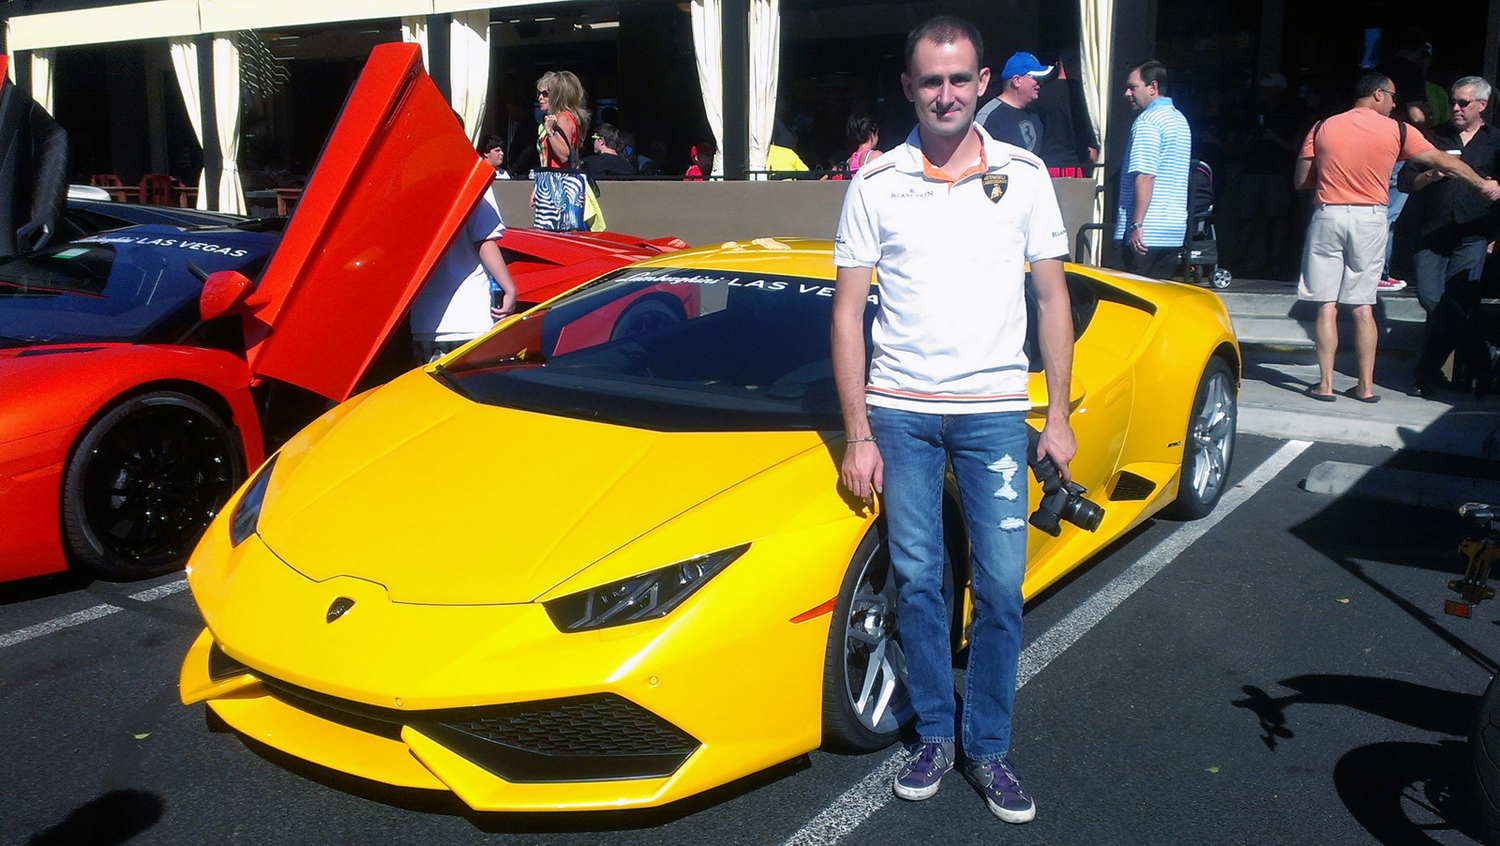 Event: 5th Annual Italian Sports Car Day in Las Vegas